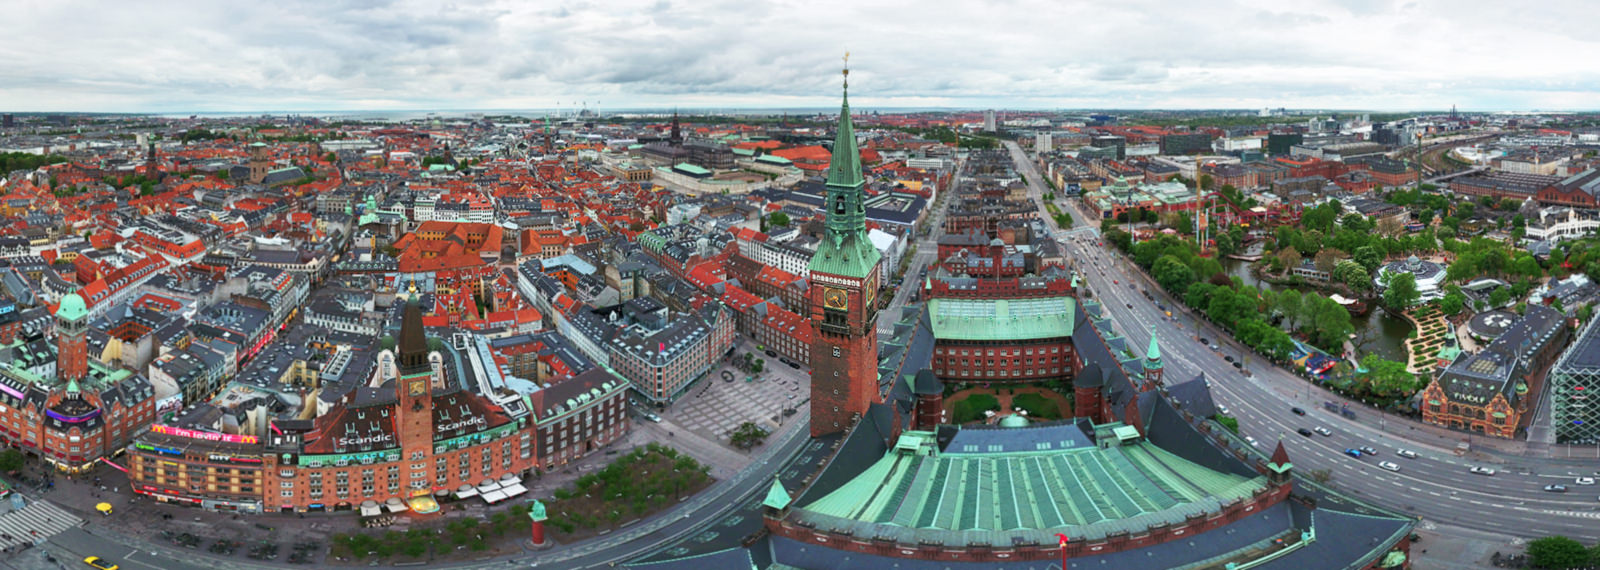 City Hall Square, Copenhagen - Virtual tour